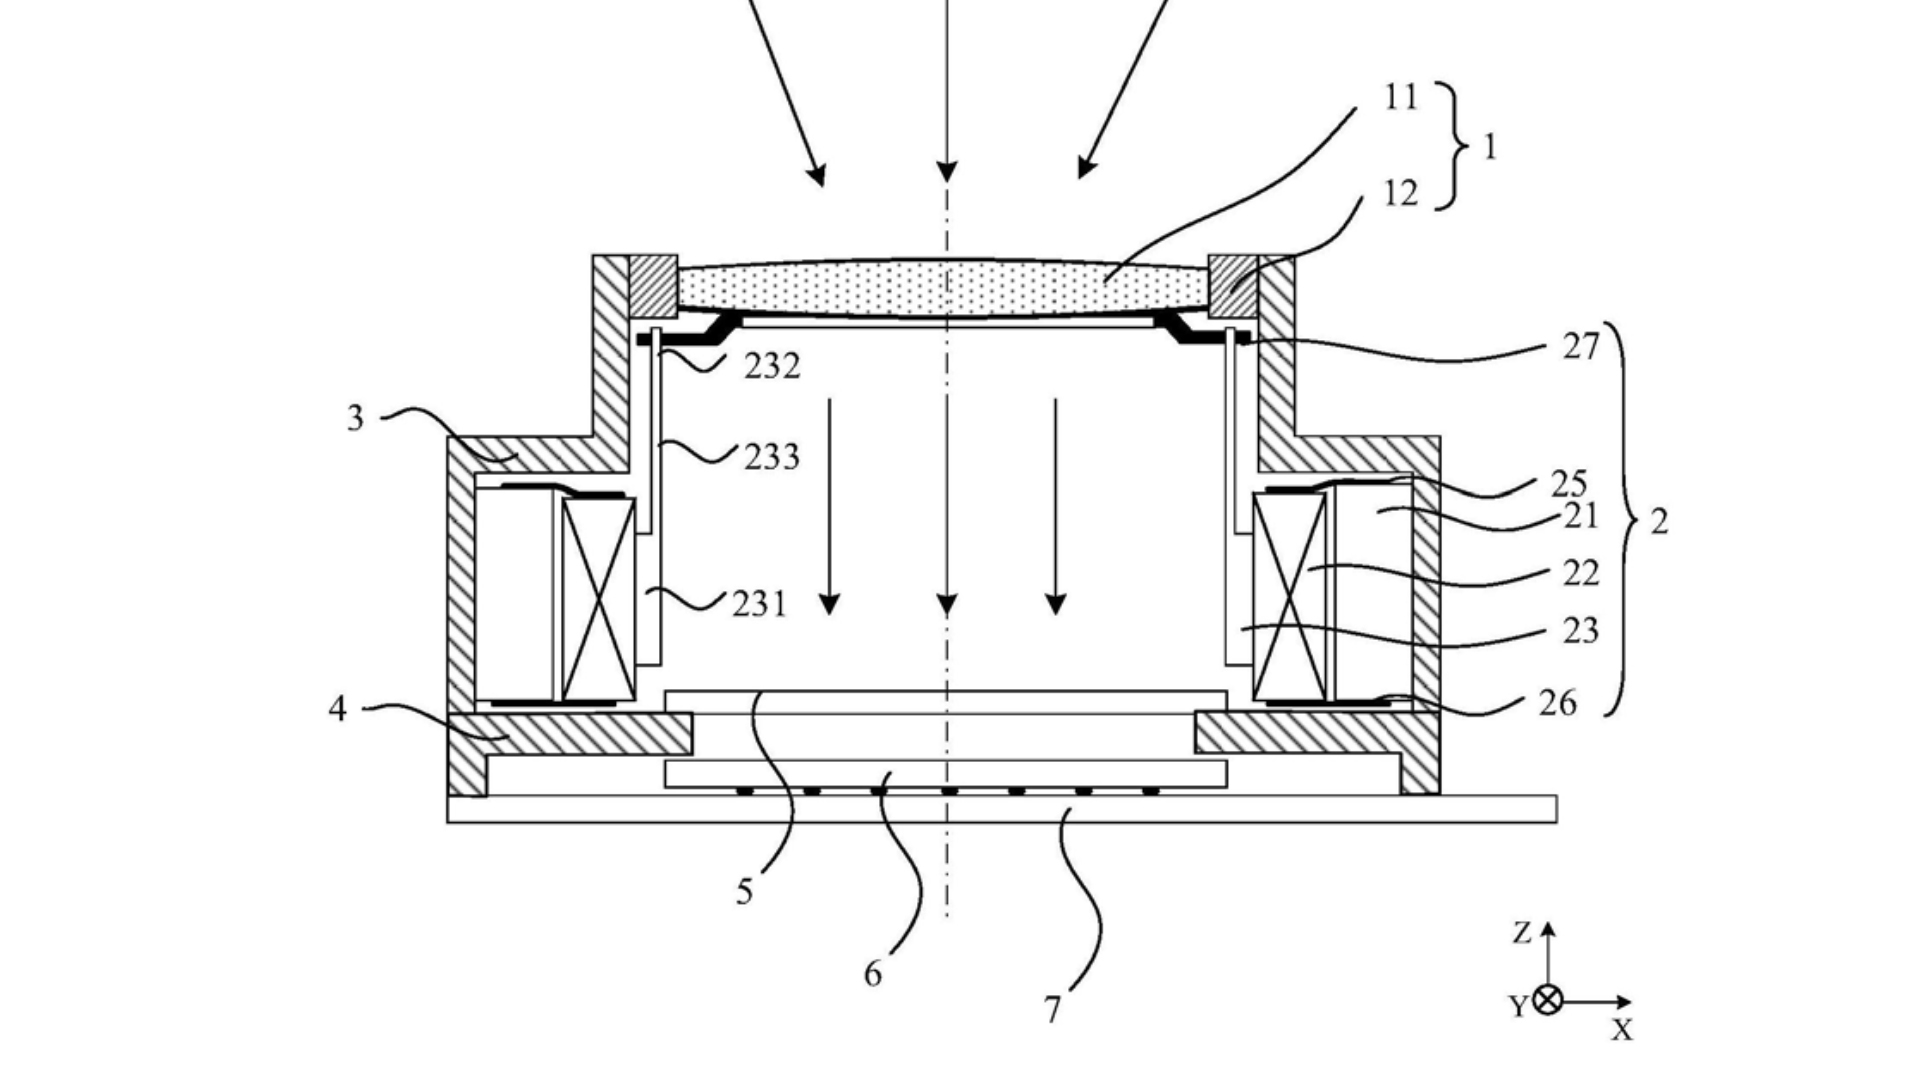 A patent diagram for a smartphone liquid lens